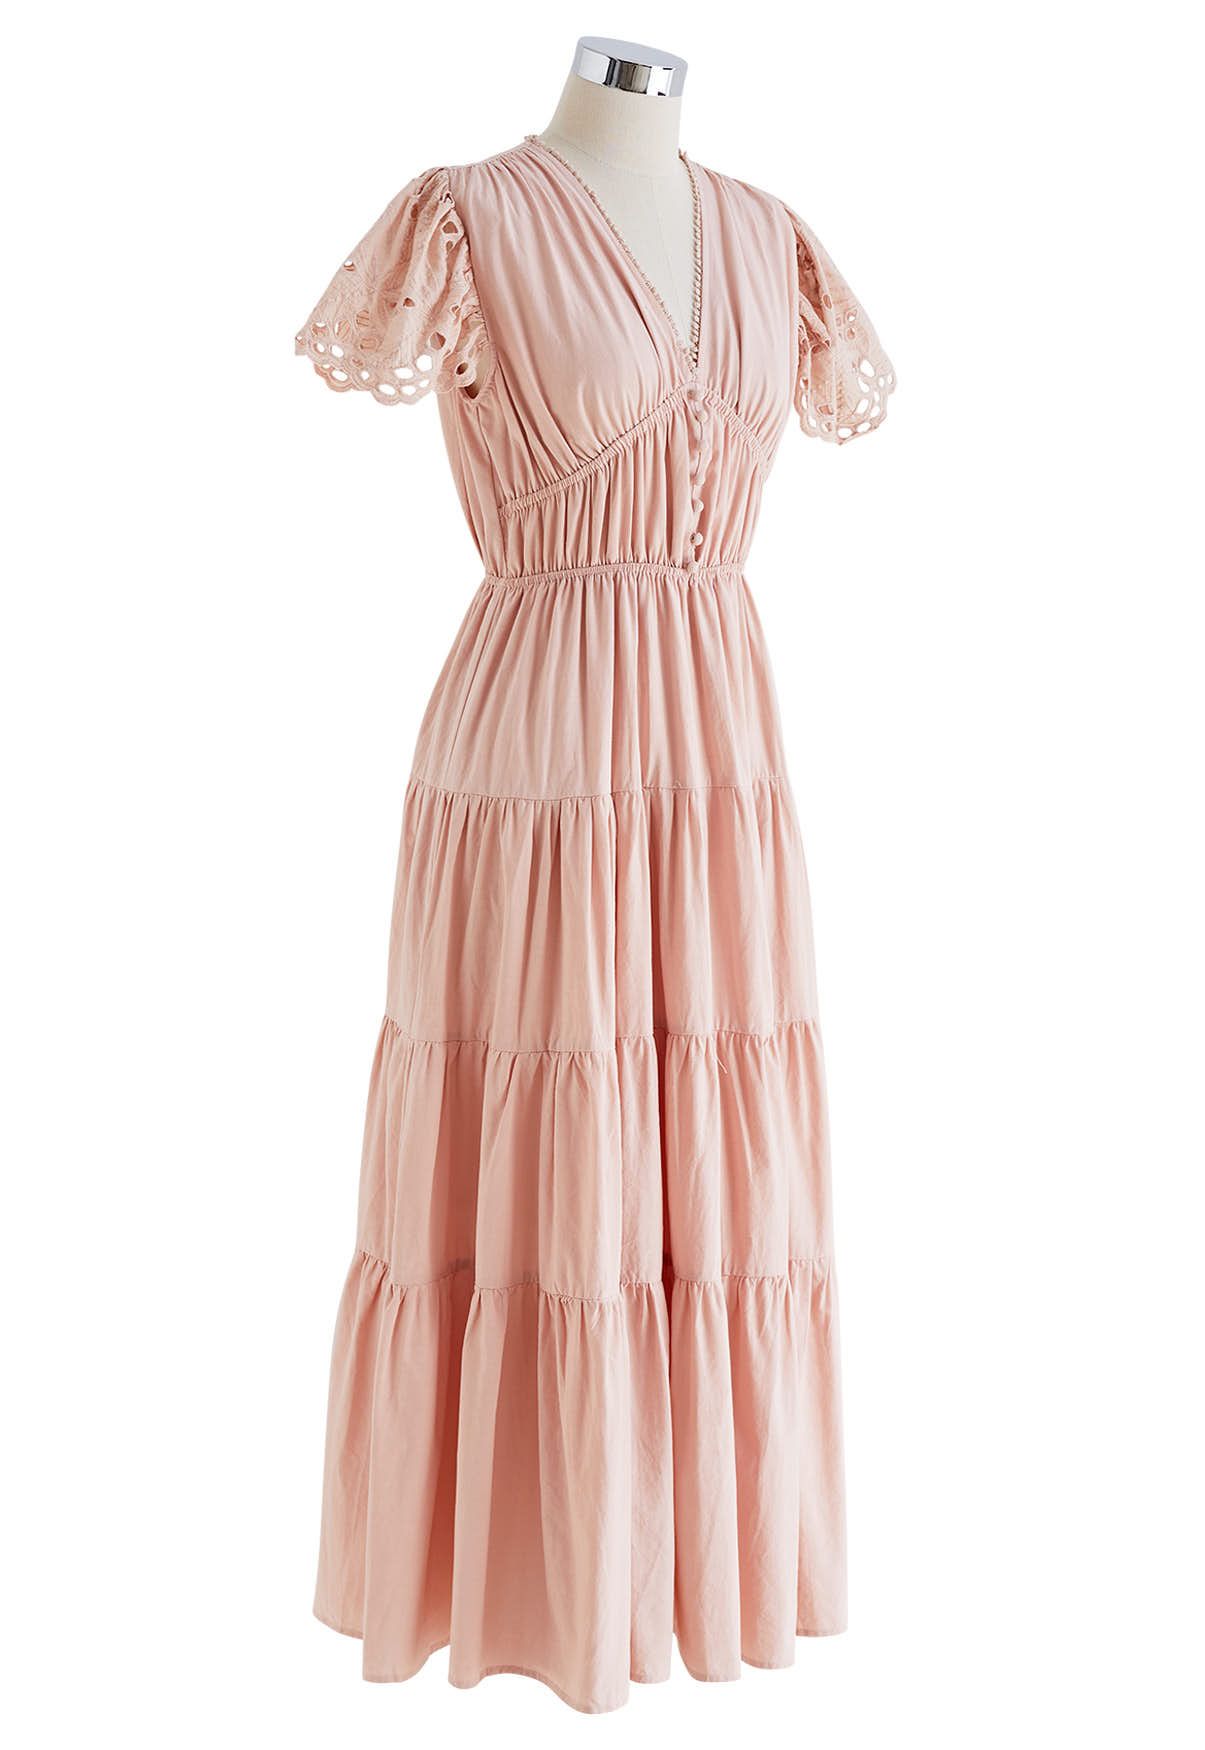 Cutwork Detail V-Neck Cotton Dress in Pink